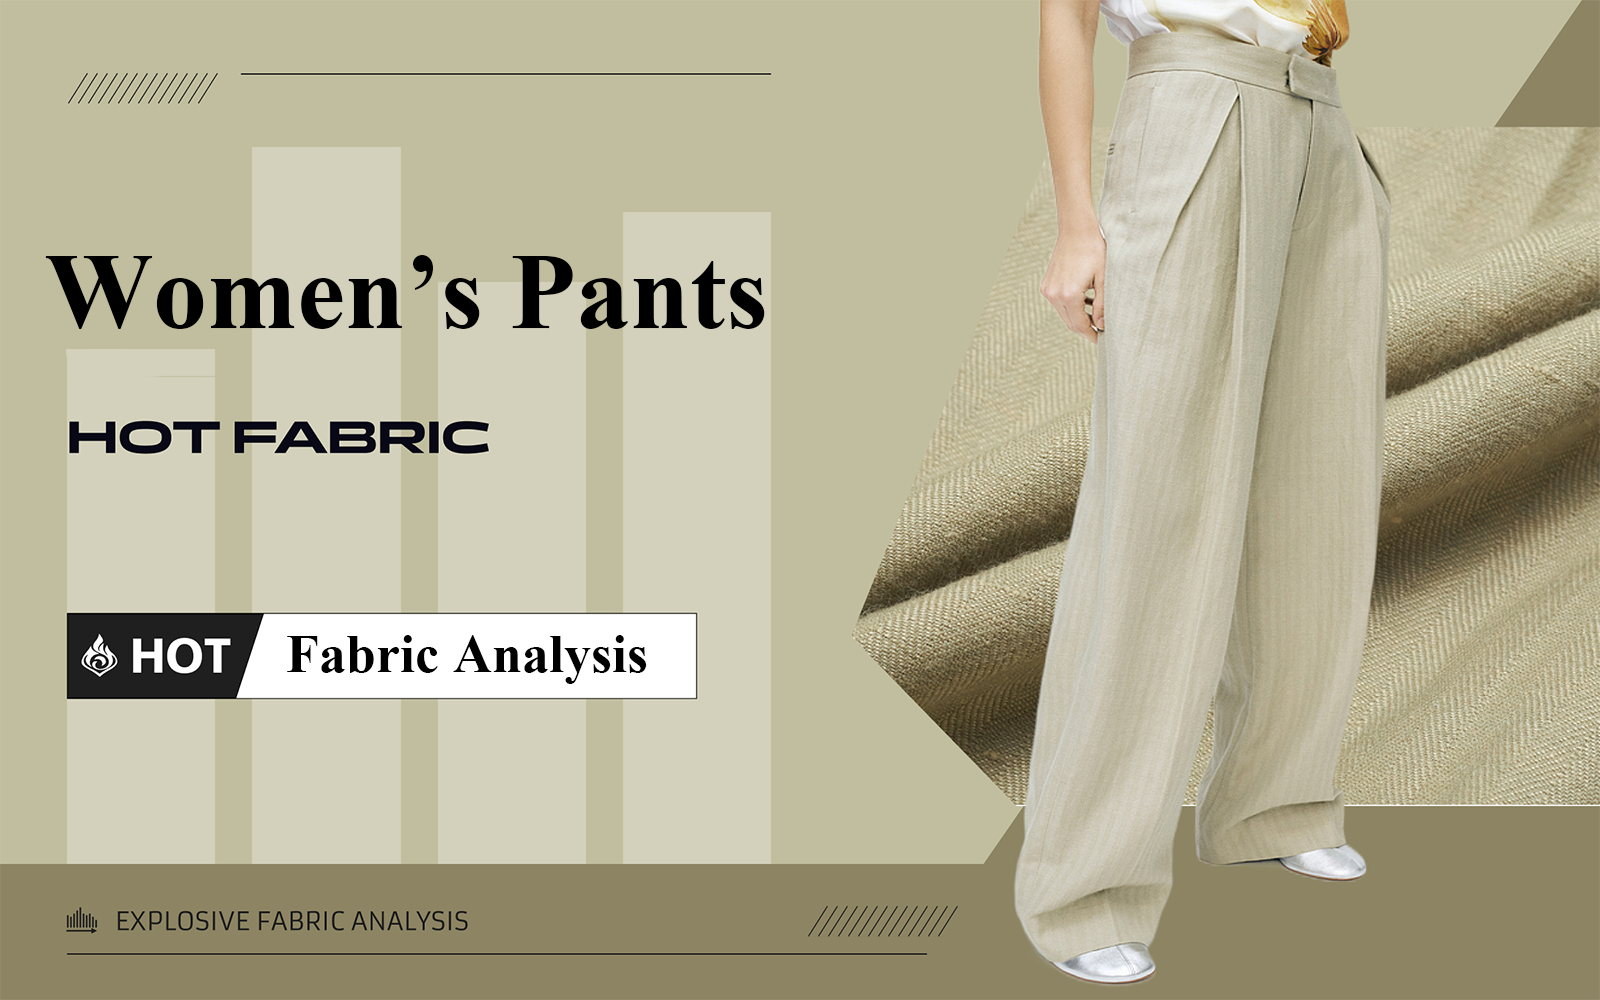 Pants Fabric -- The TOP Ranking of Womenswear